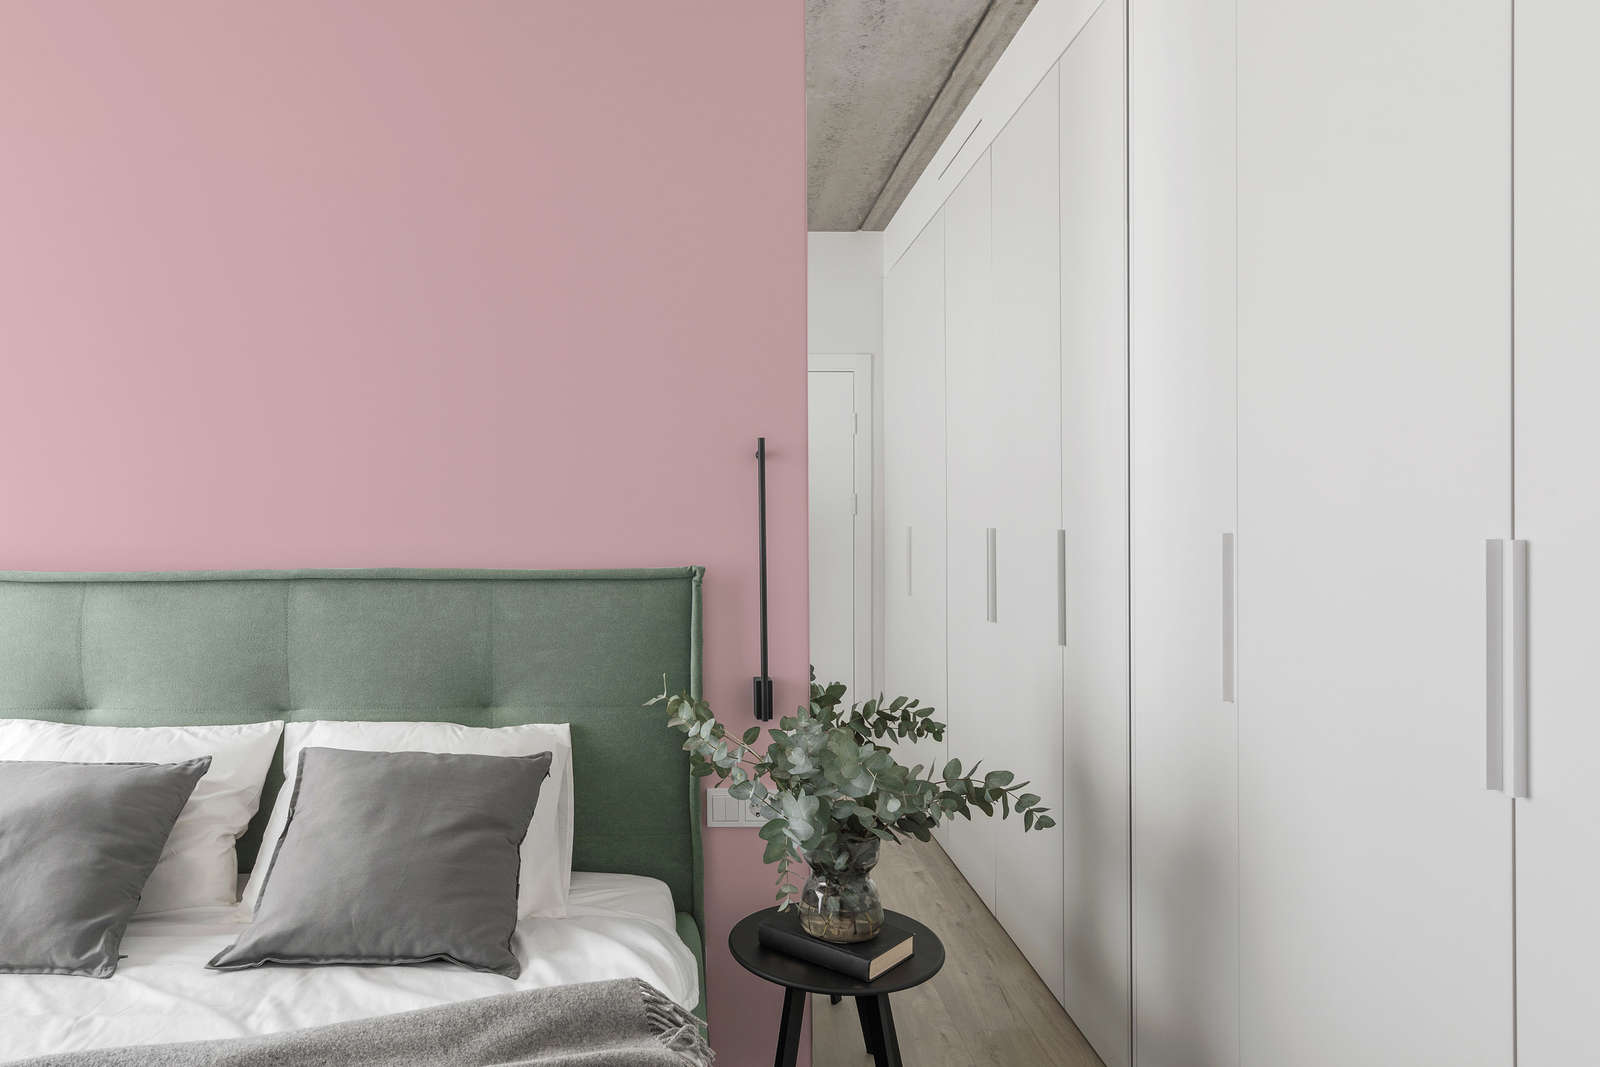             Pittura murale Premium rosa tenue »Blooming Blossom« NW1016 – 5 litri
        